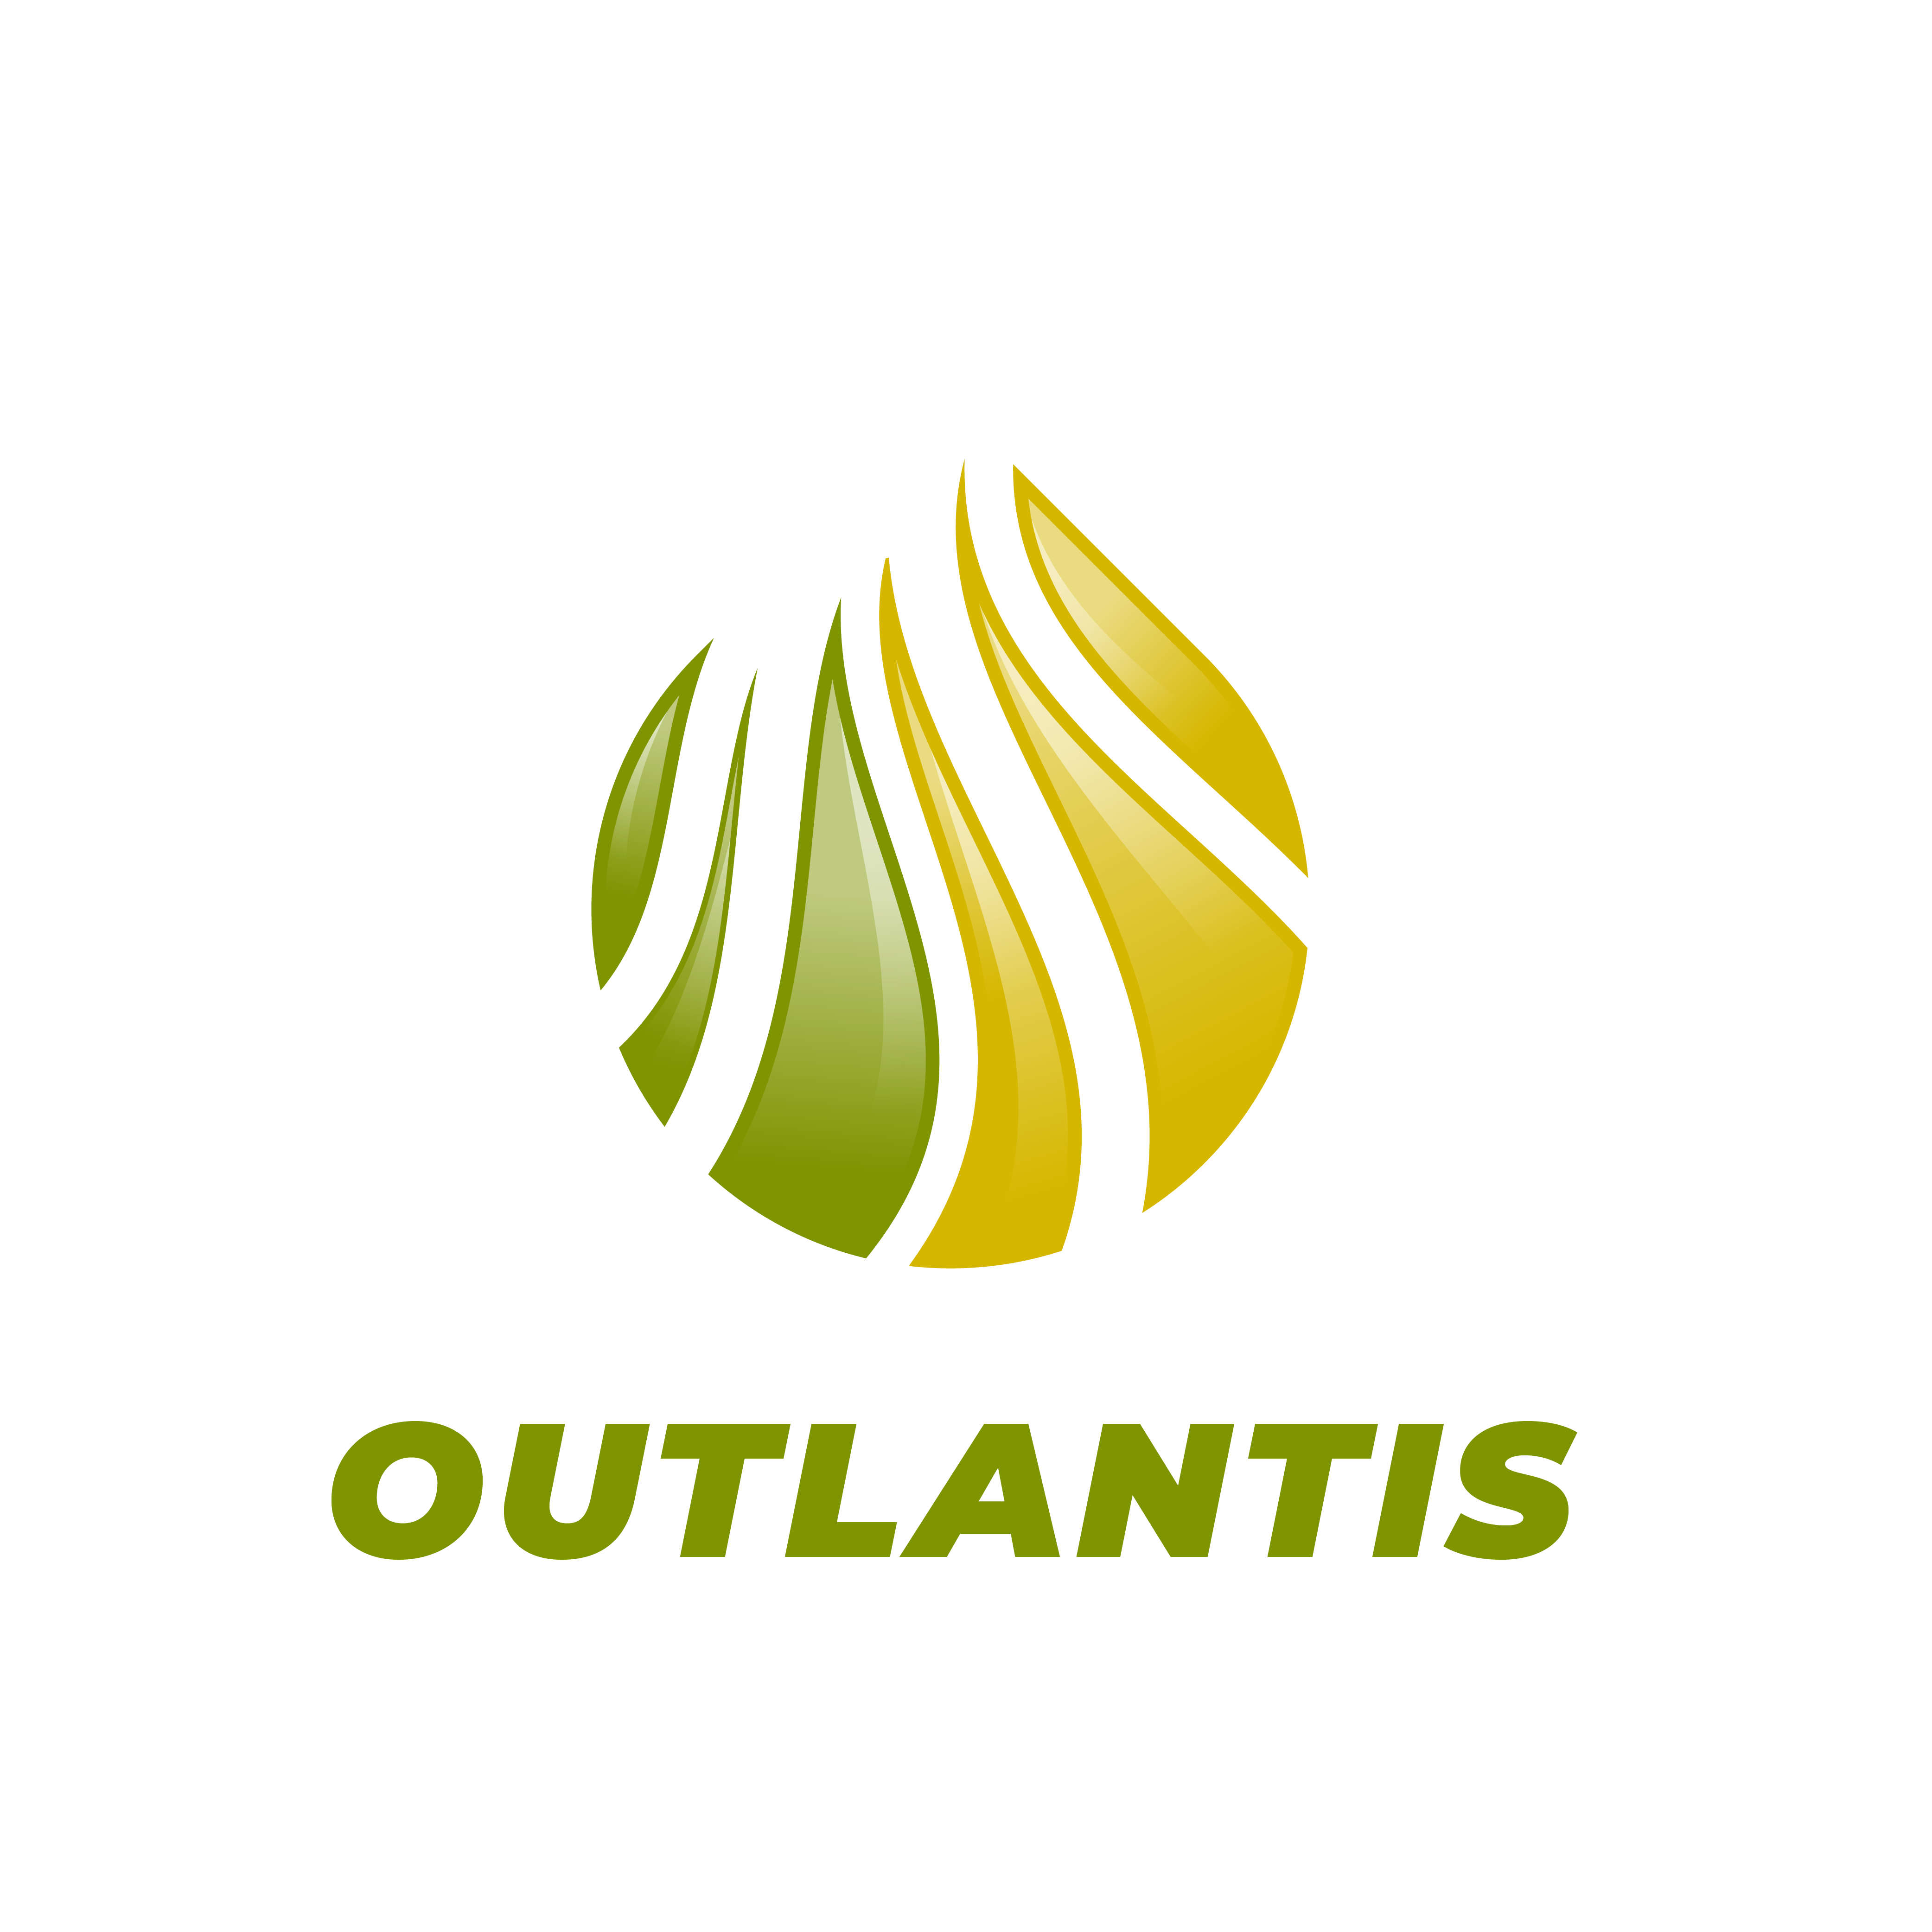 Outlantis Logo_Colored Version 2